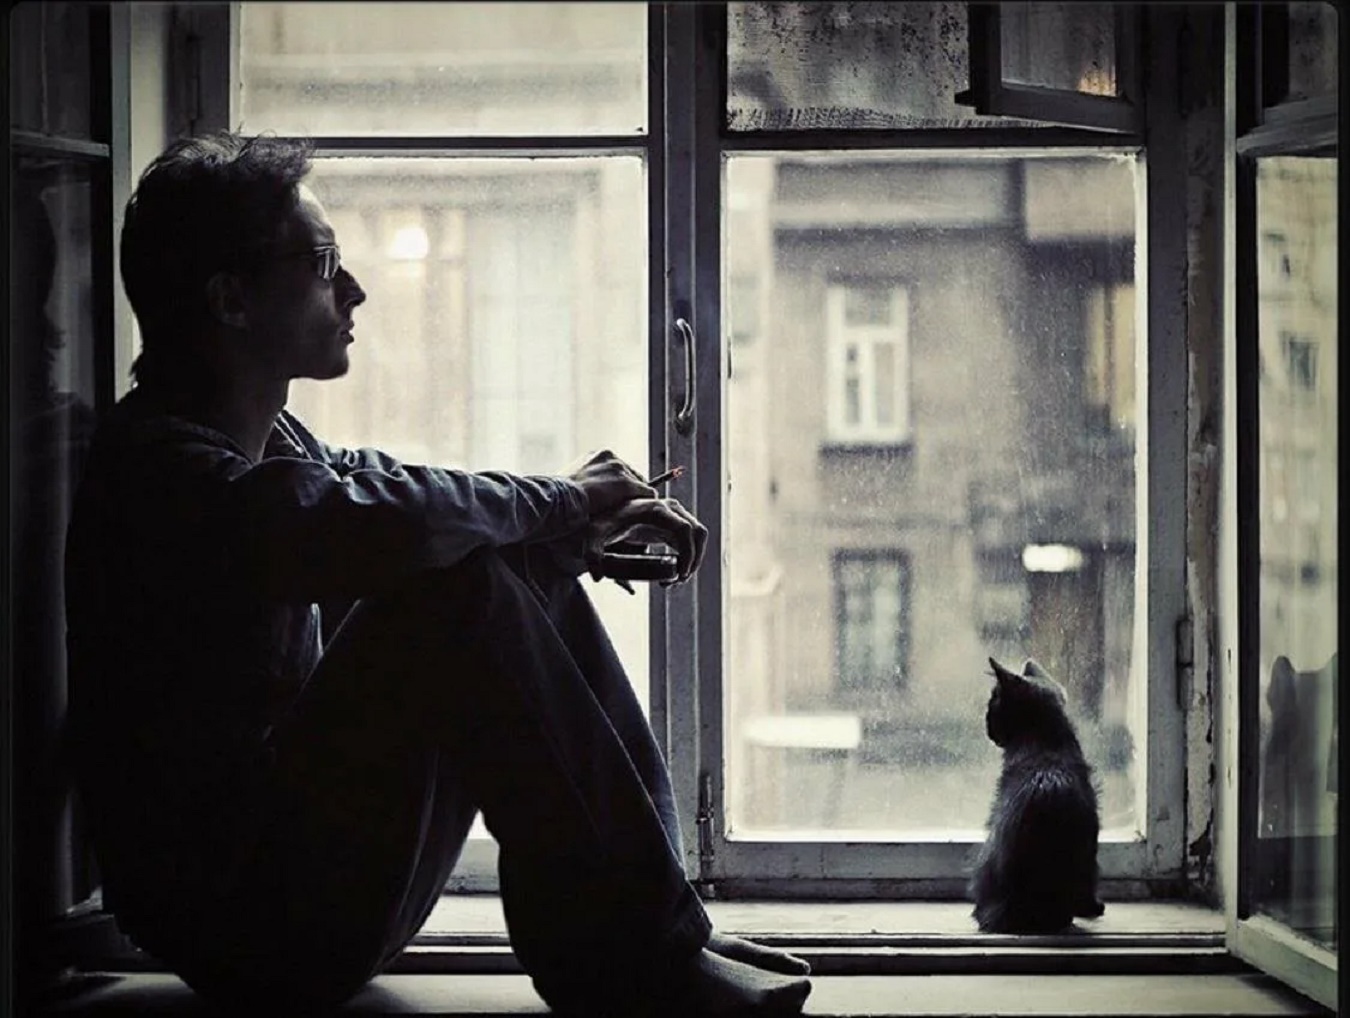 Скучающий у окна. Парень у окна. Одинокий мужчина у окна. Сидит у окна. Одинокий человек у окна.